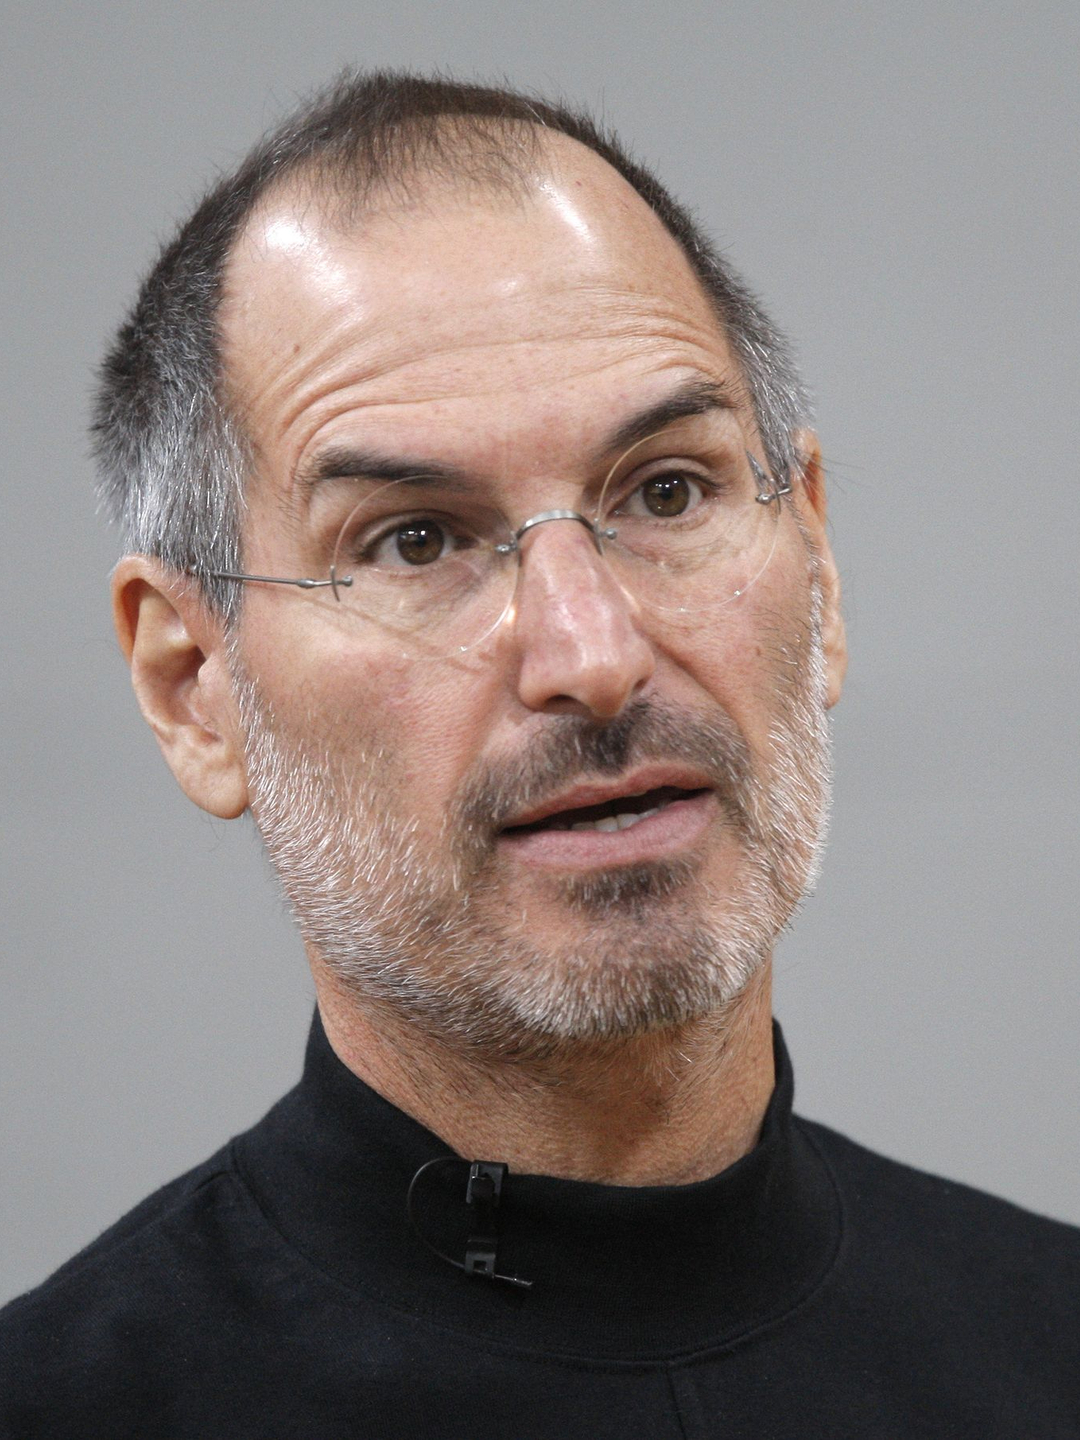 Steve Jobs date of birth